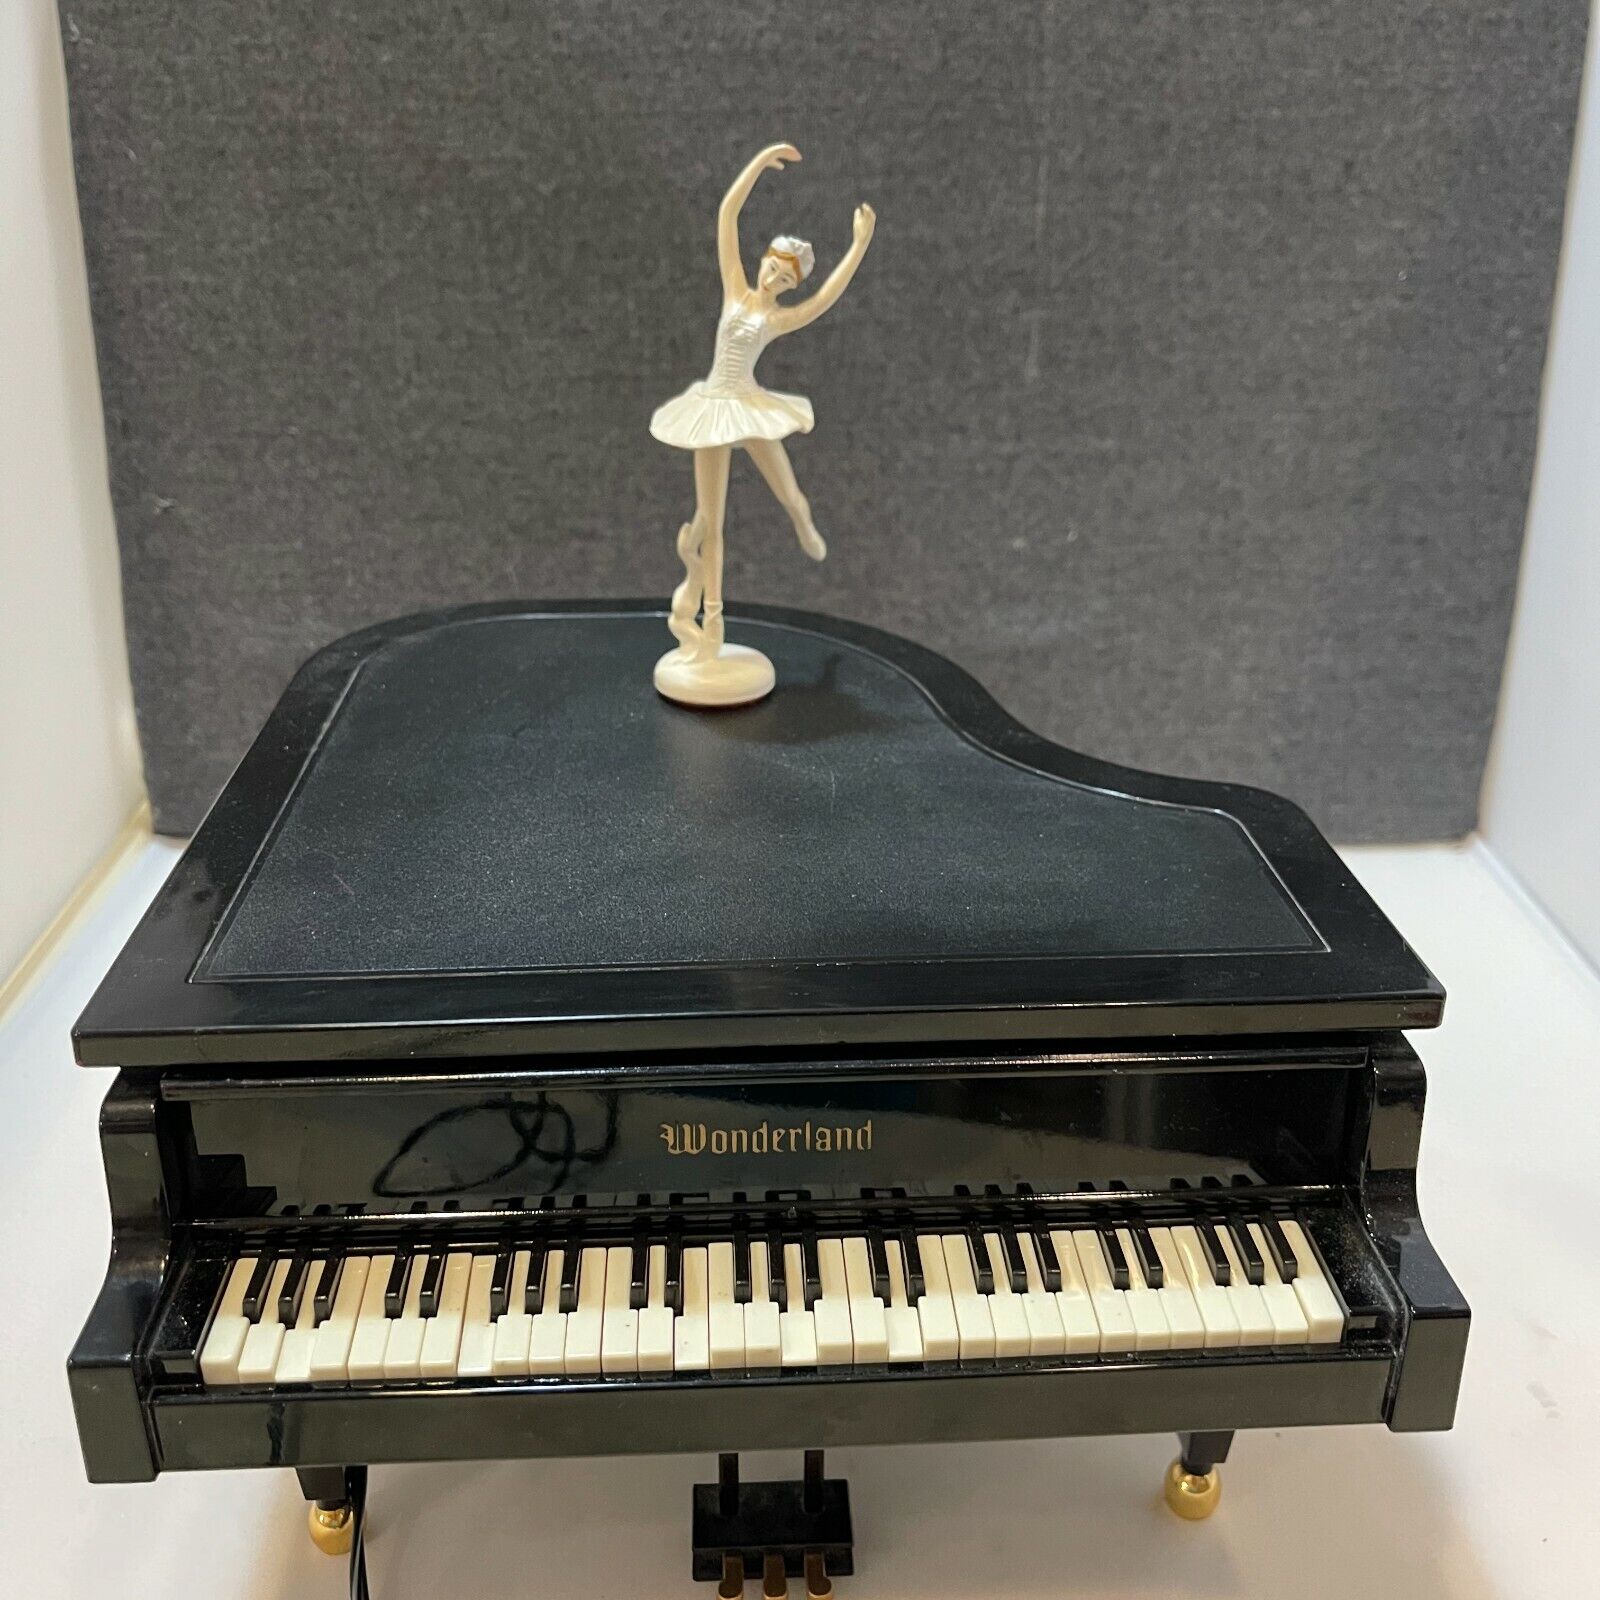 Wonderland Classical Piano With Dancing Prima Ballerina Plays 6 Classical Tunes